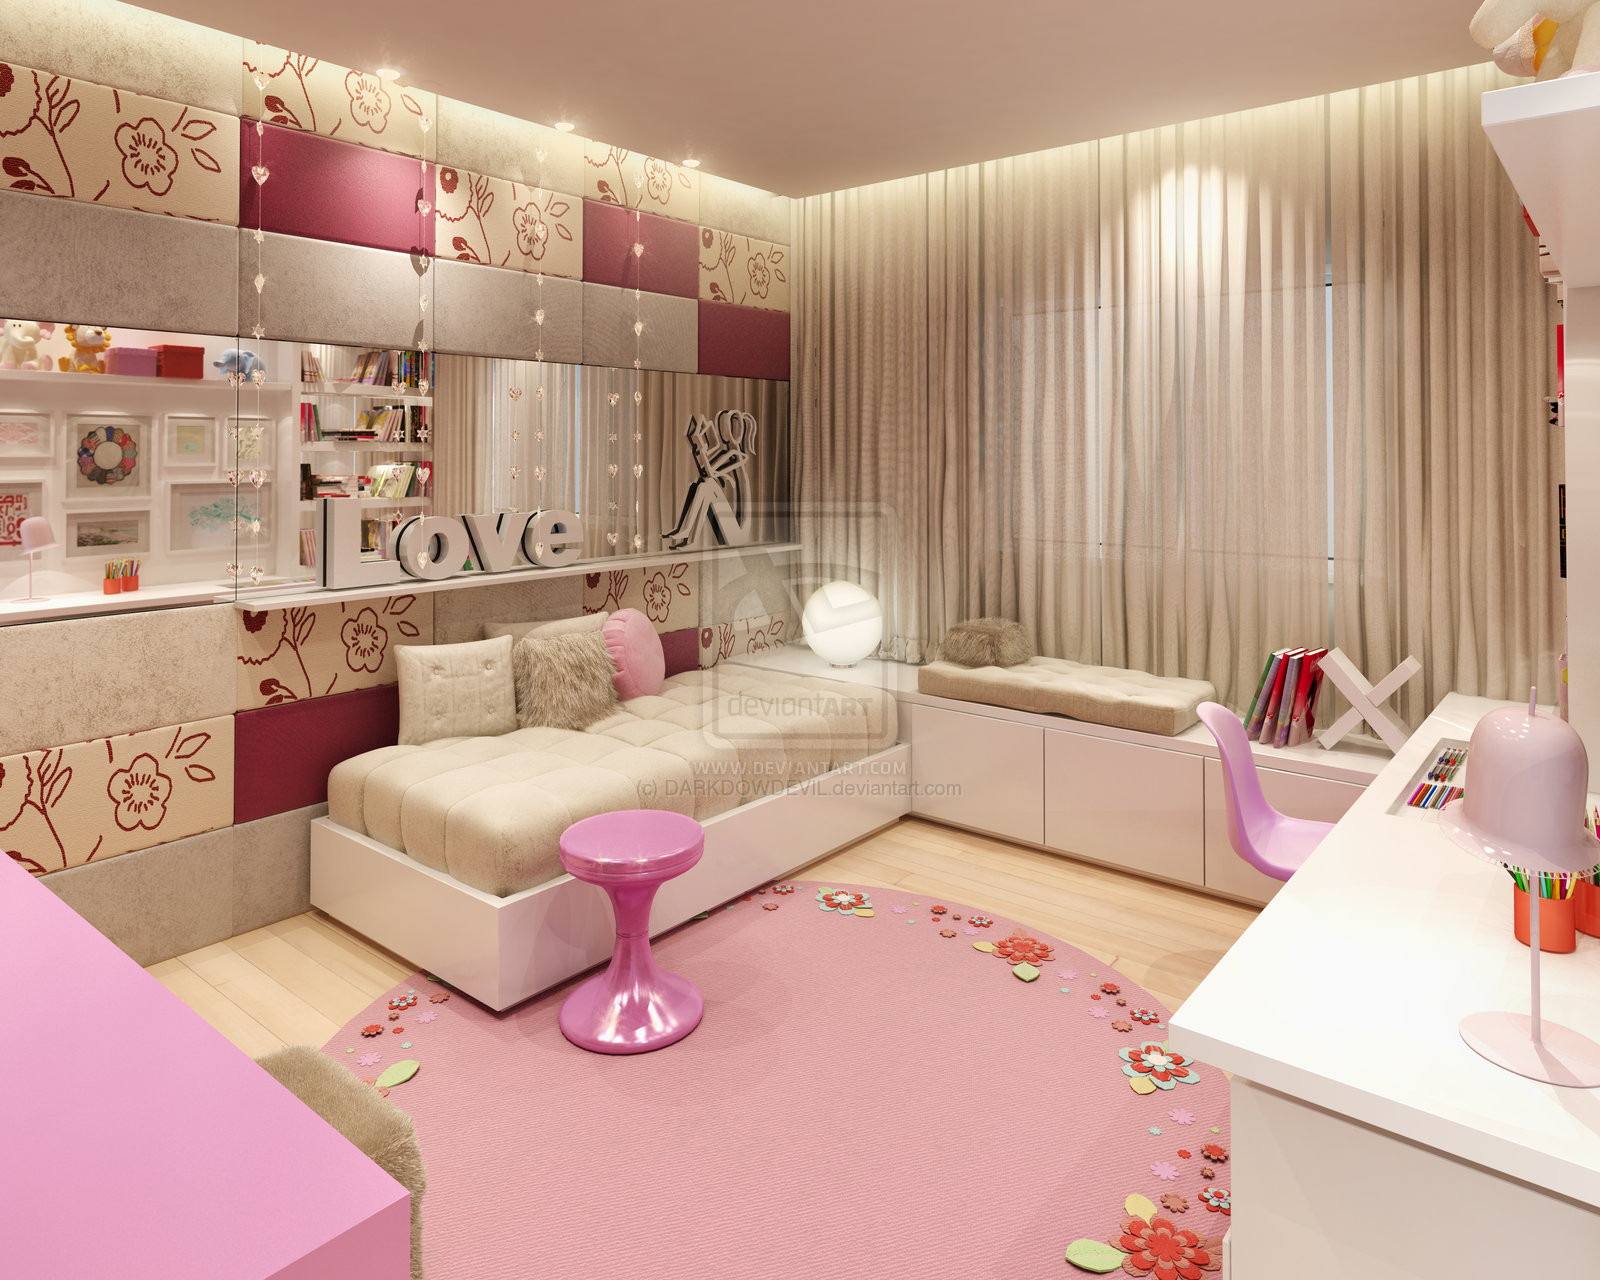 Cute Bedroom Decor
 Girly Bedroom Design Ideas Wonderful